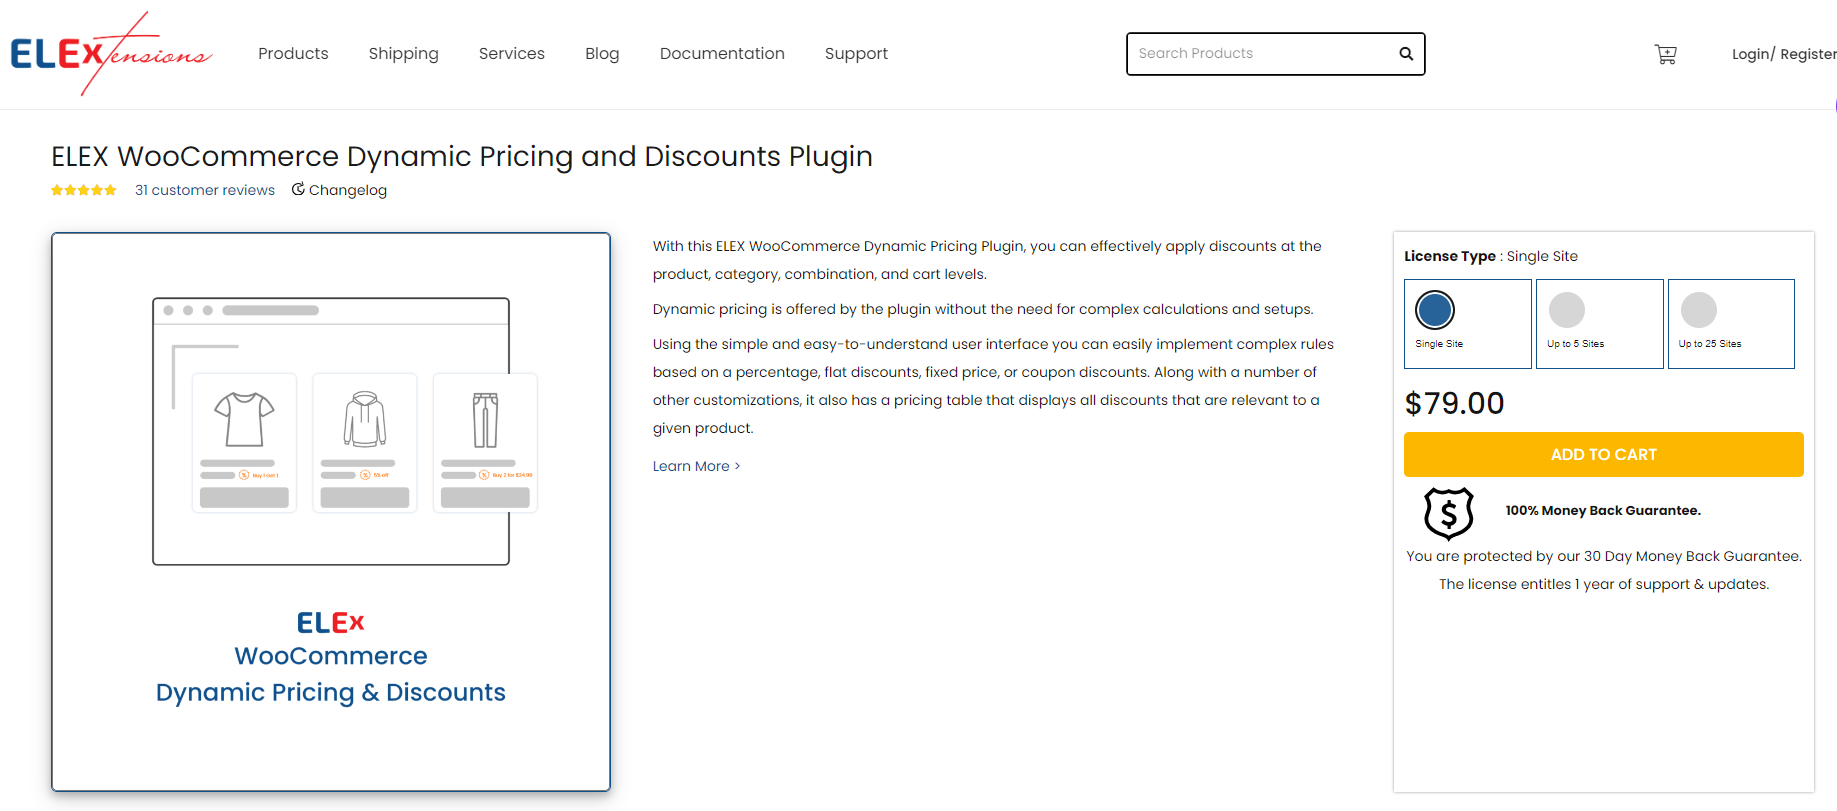 ELEX WooCommerce Dynamic Pricing & Discounts